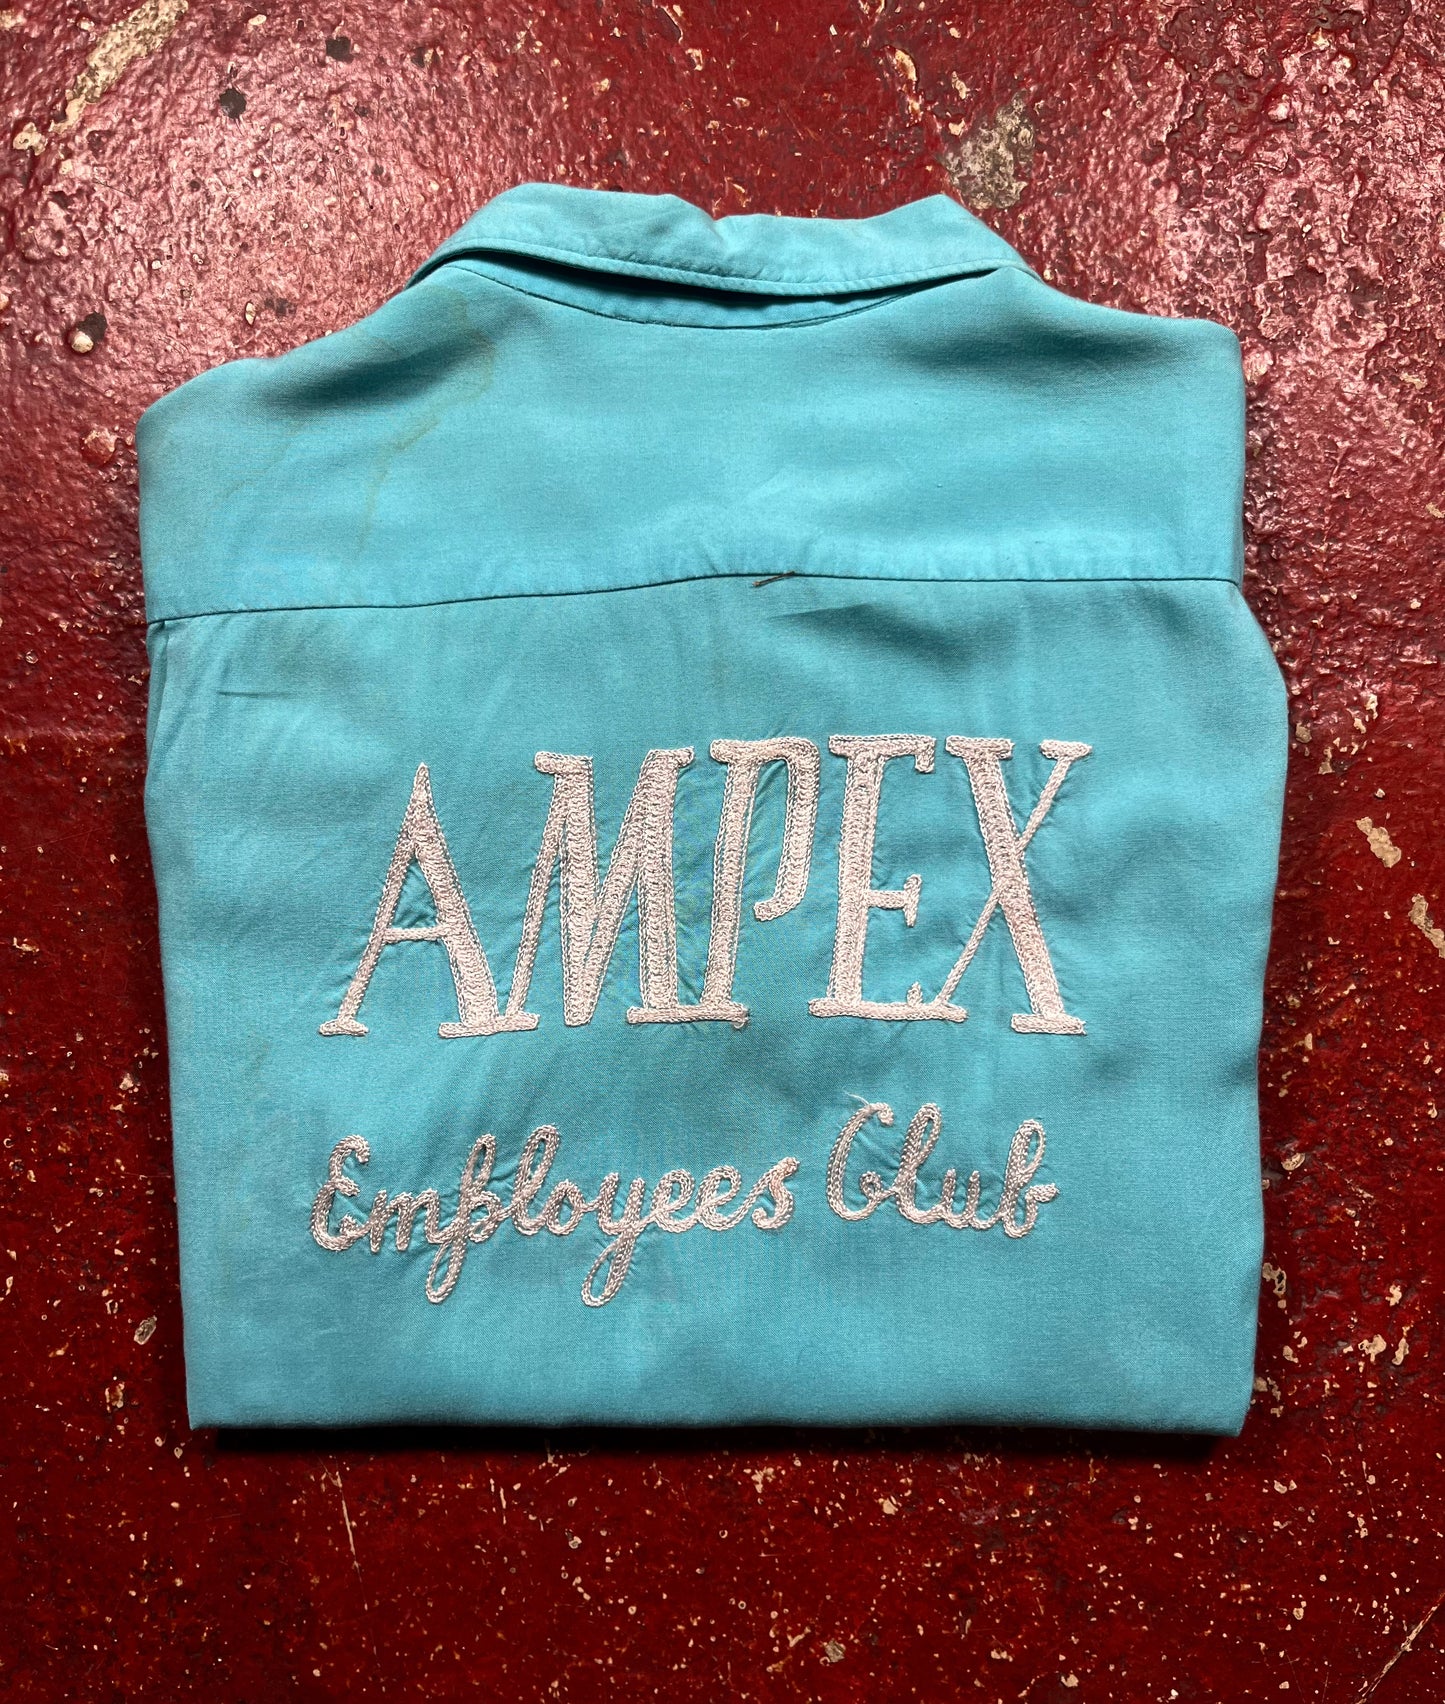 50s/60s Ampex Employees Club Bowling Shirt